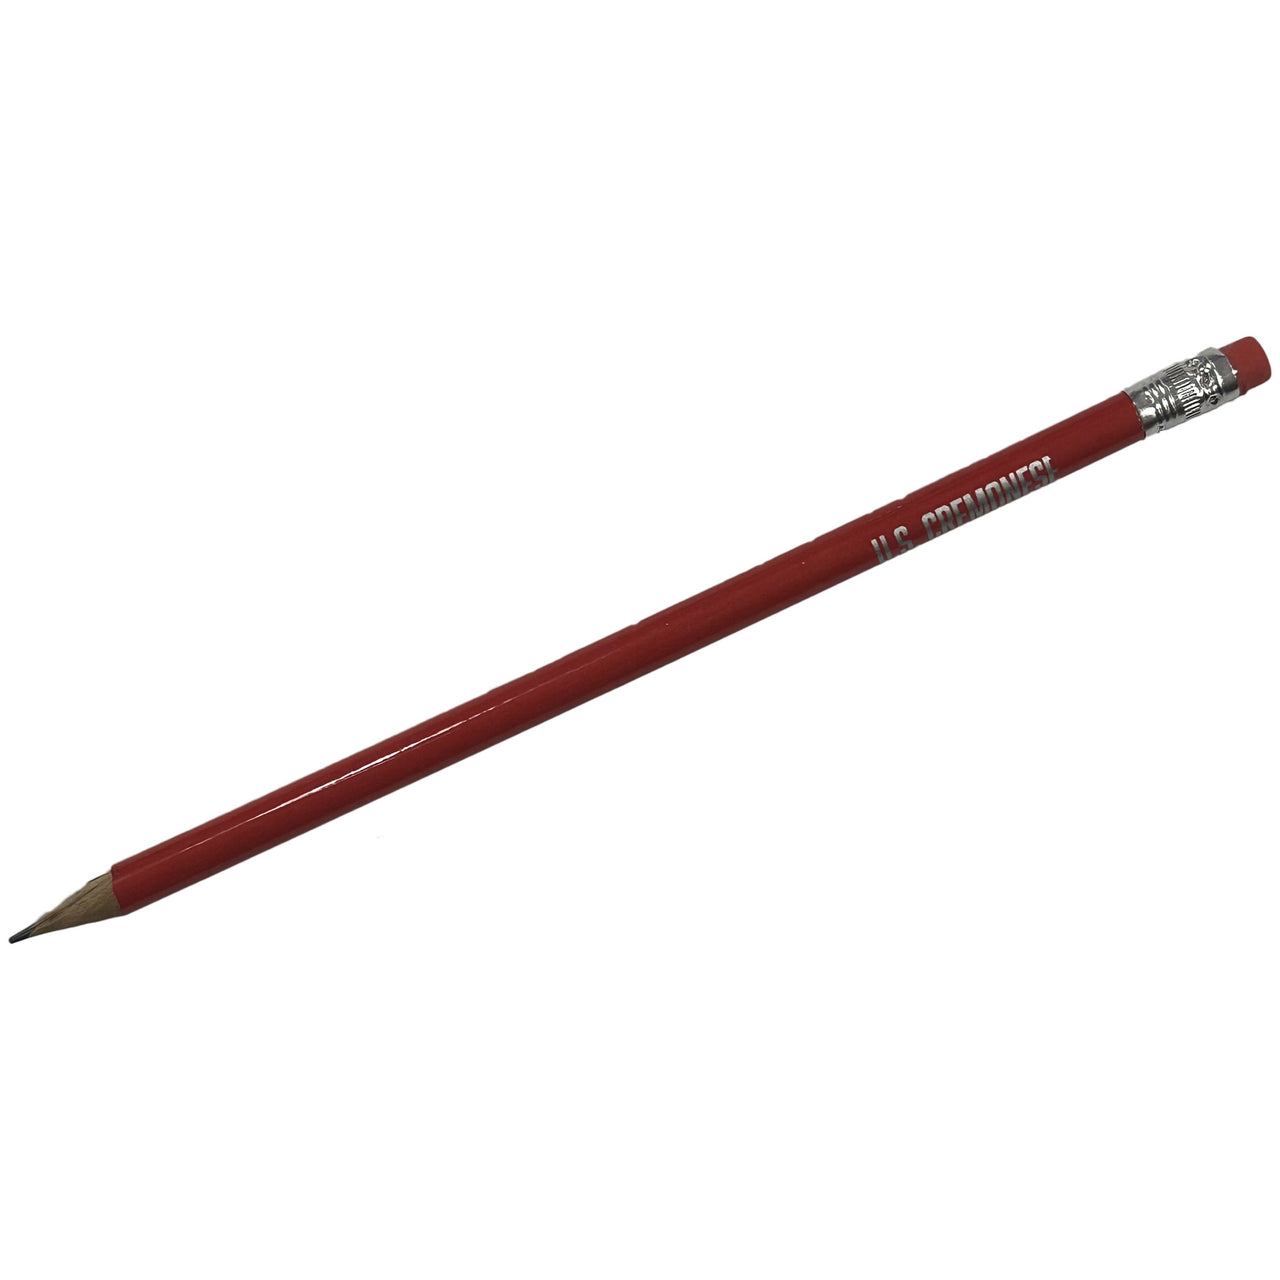 US CREMONESE pencil with company logo